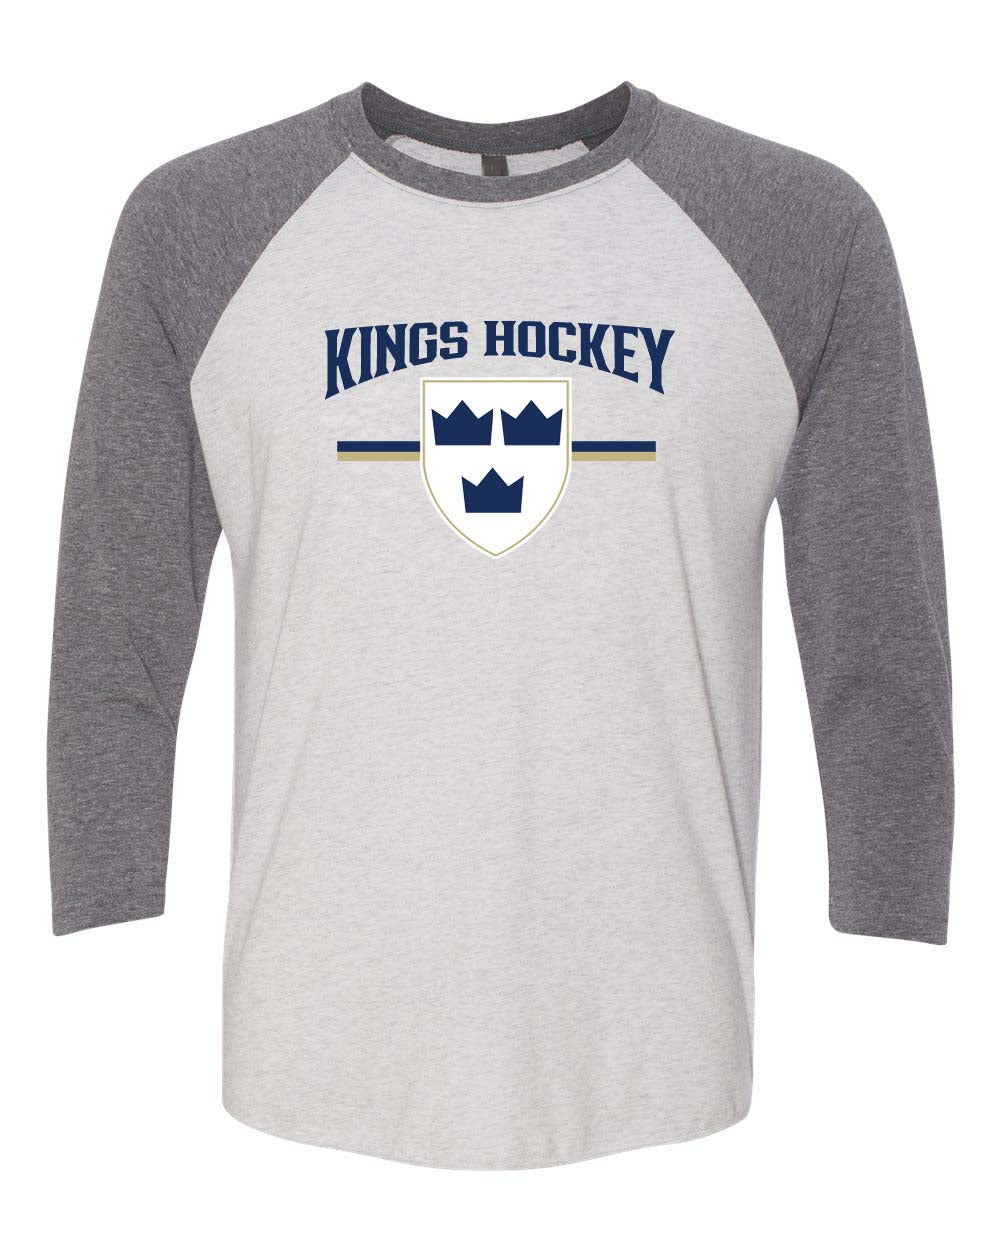 Kings Hockey Design 5 raglan shirt